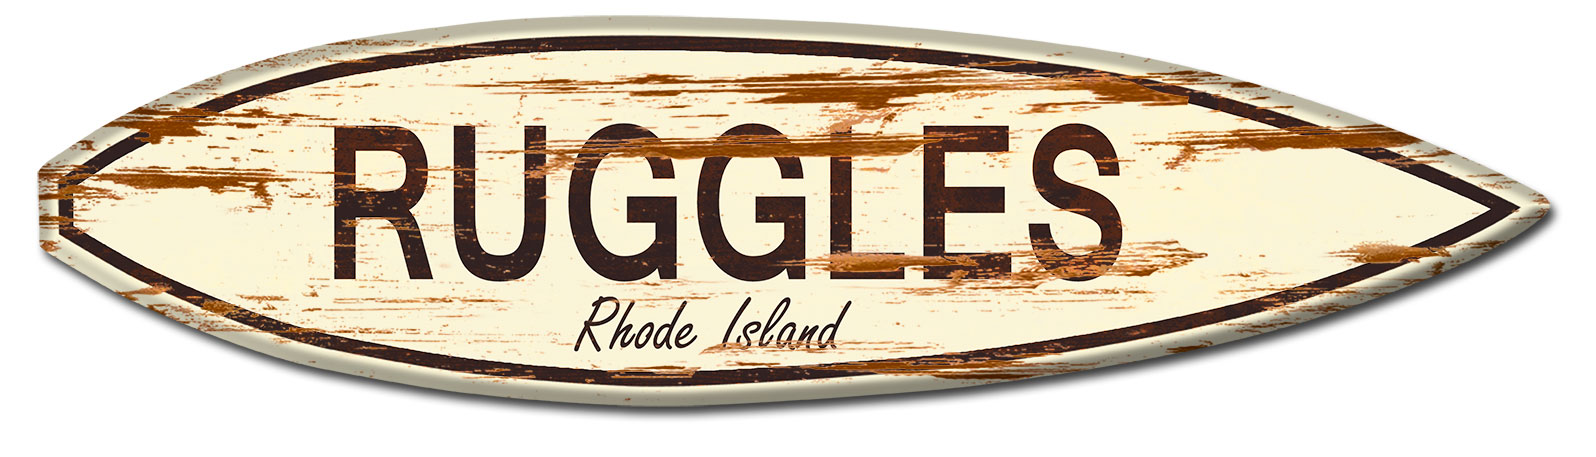 Ruggles Surf Board Wood Print Vintage Sign